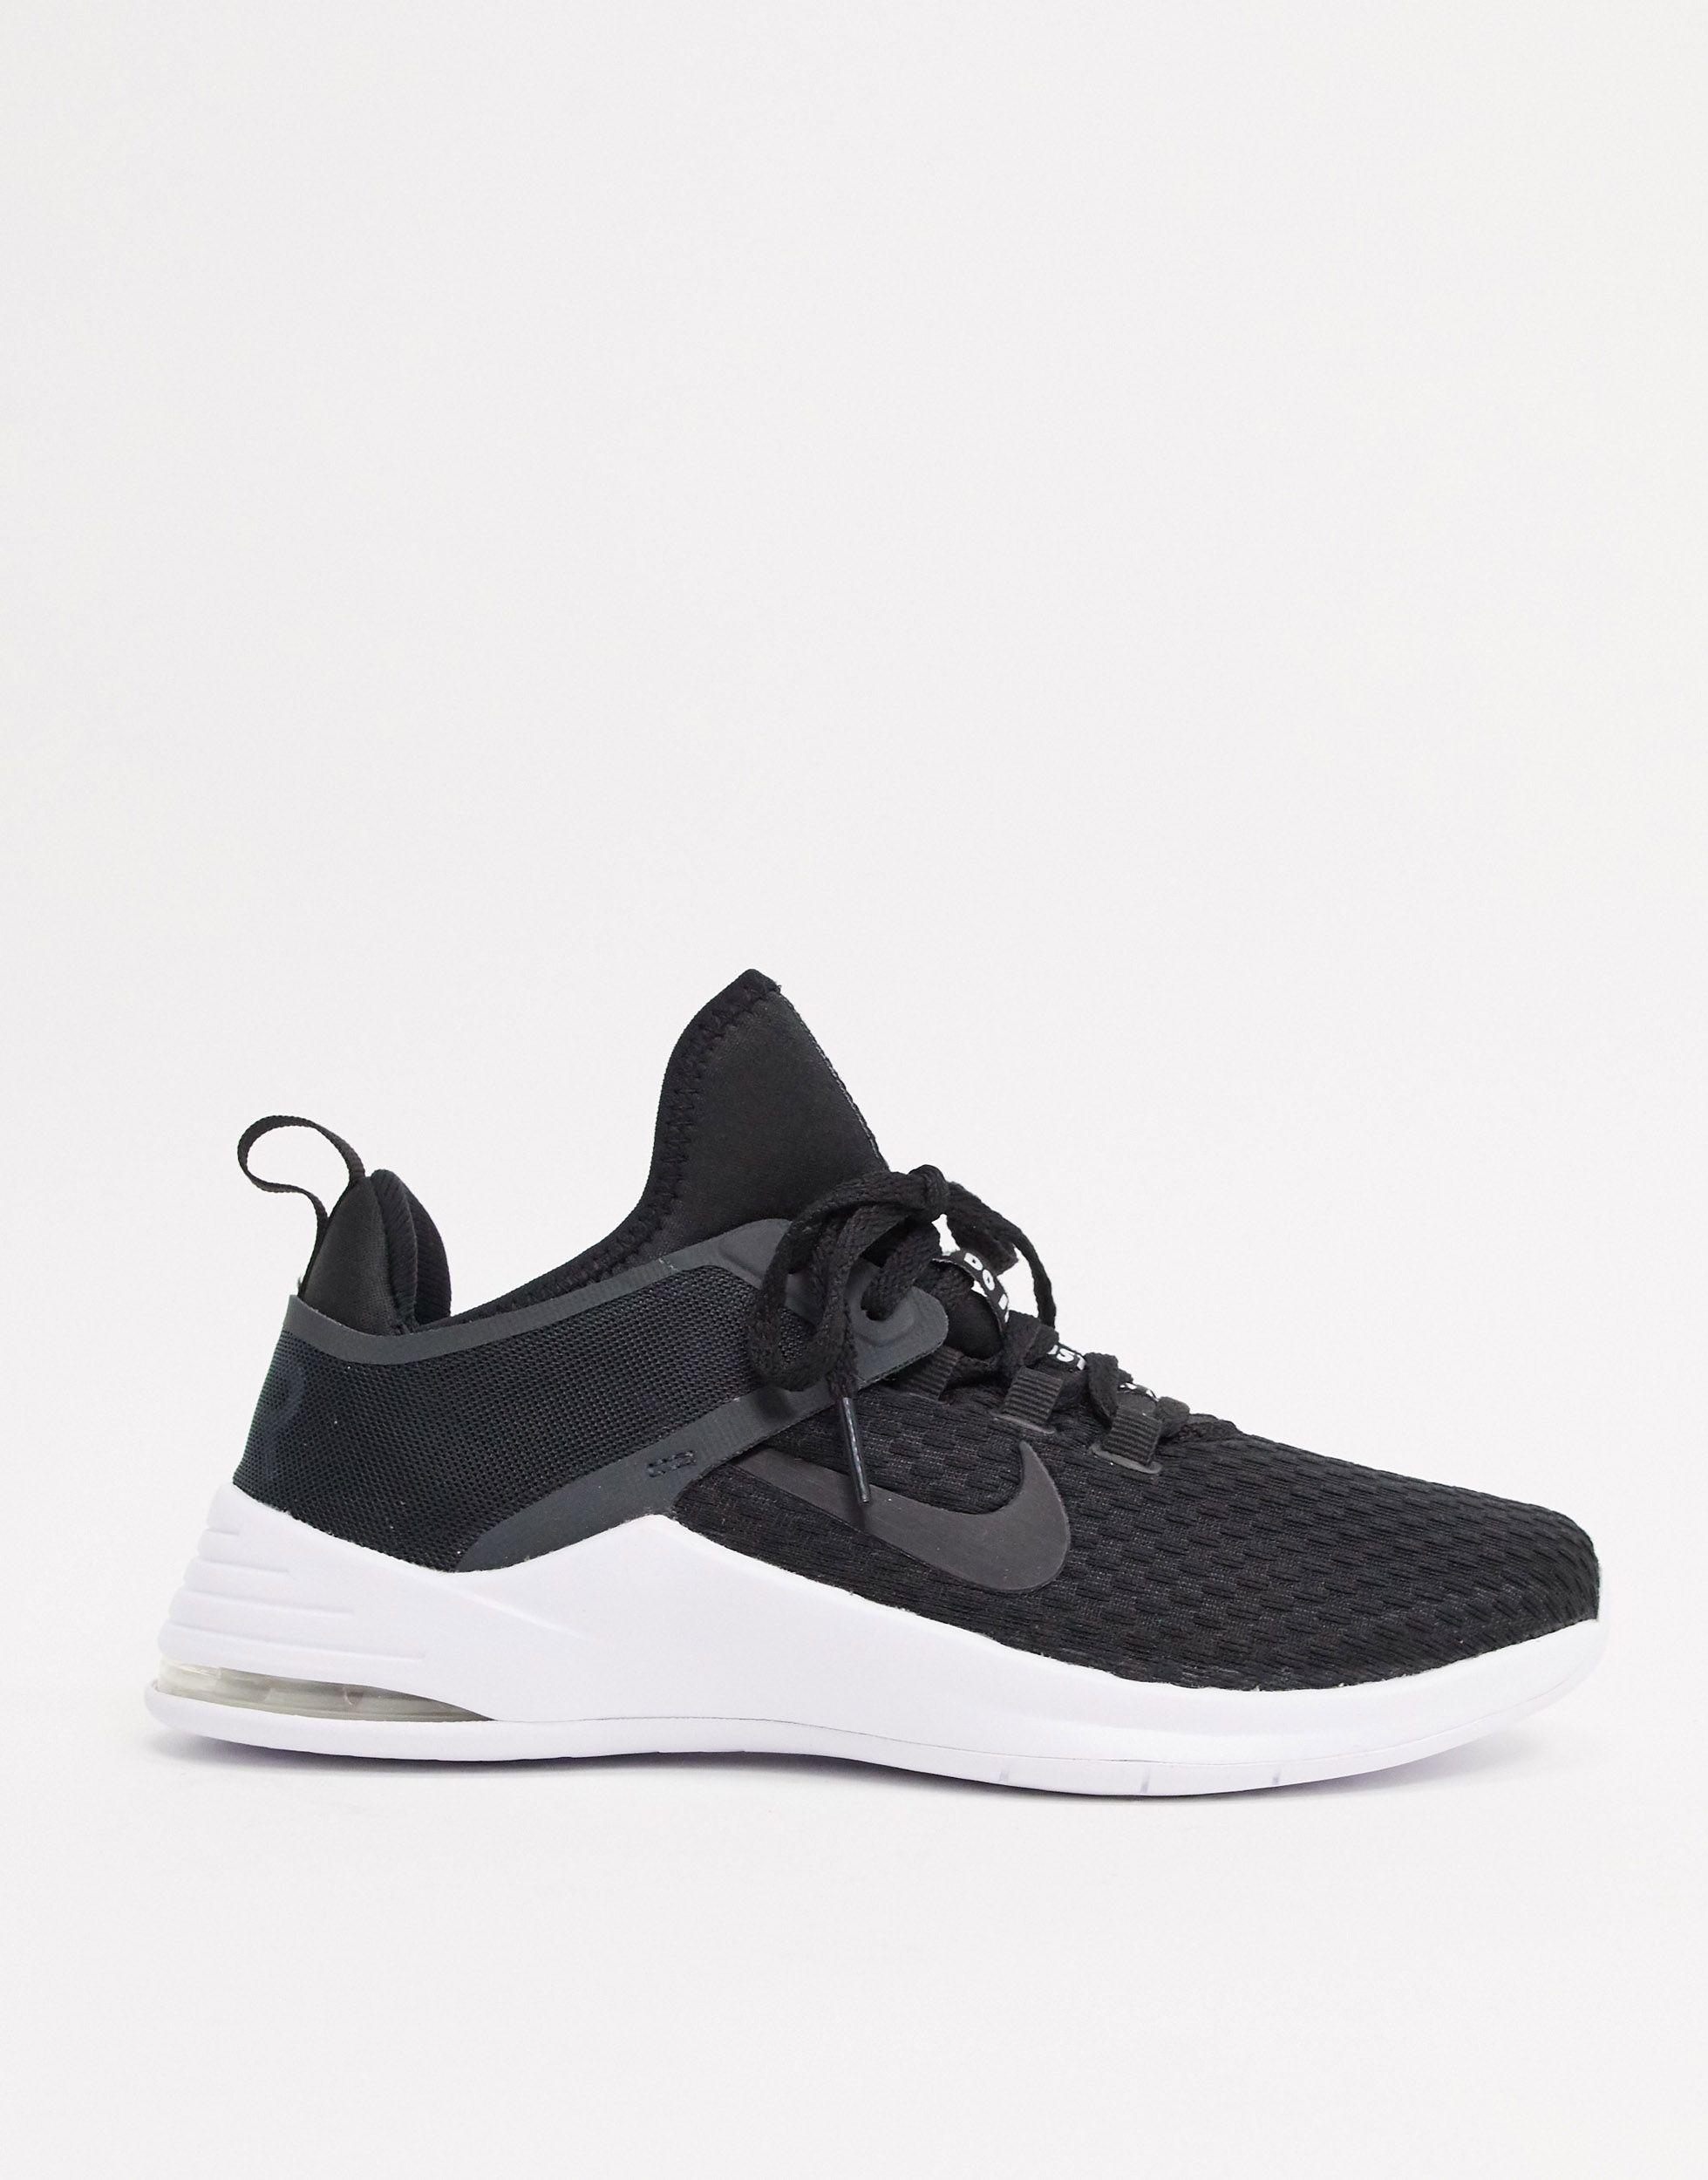 Nike Air Max Bella Tr 2 Training Shoe in Black/Black - Anthracite - White  (Black) | Lyst